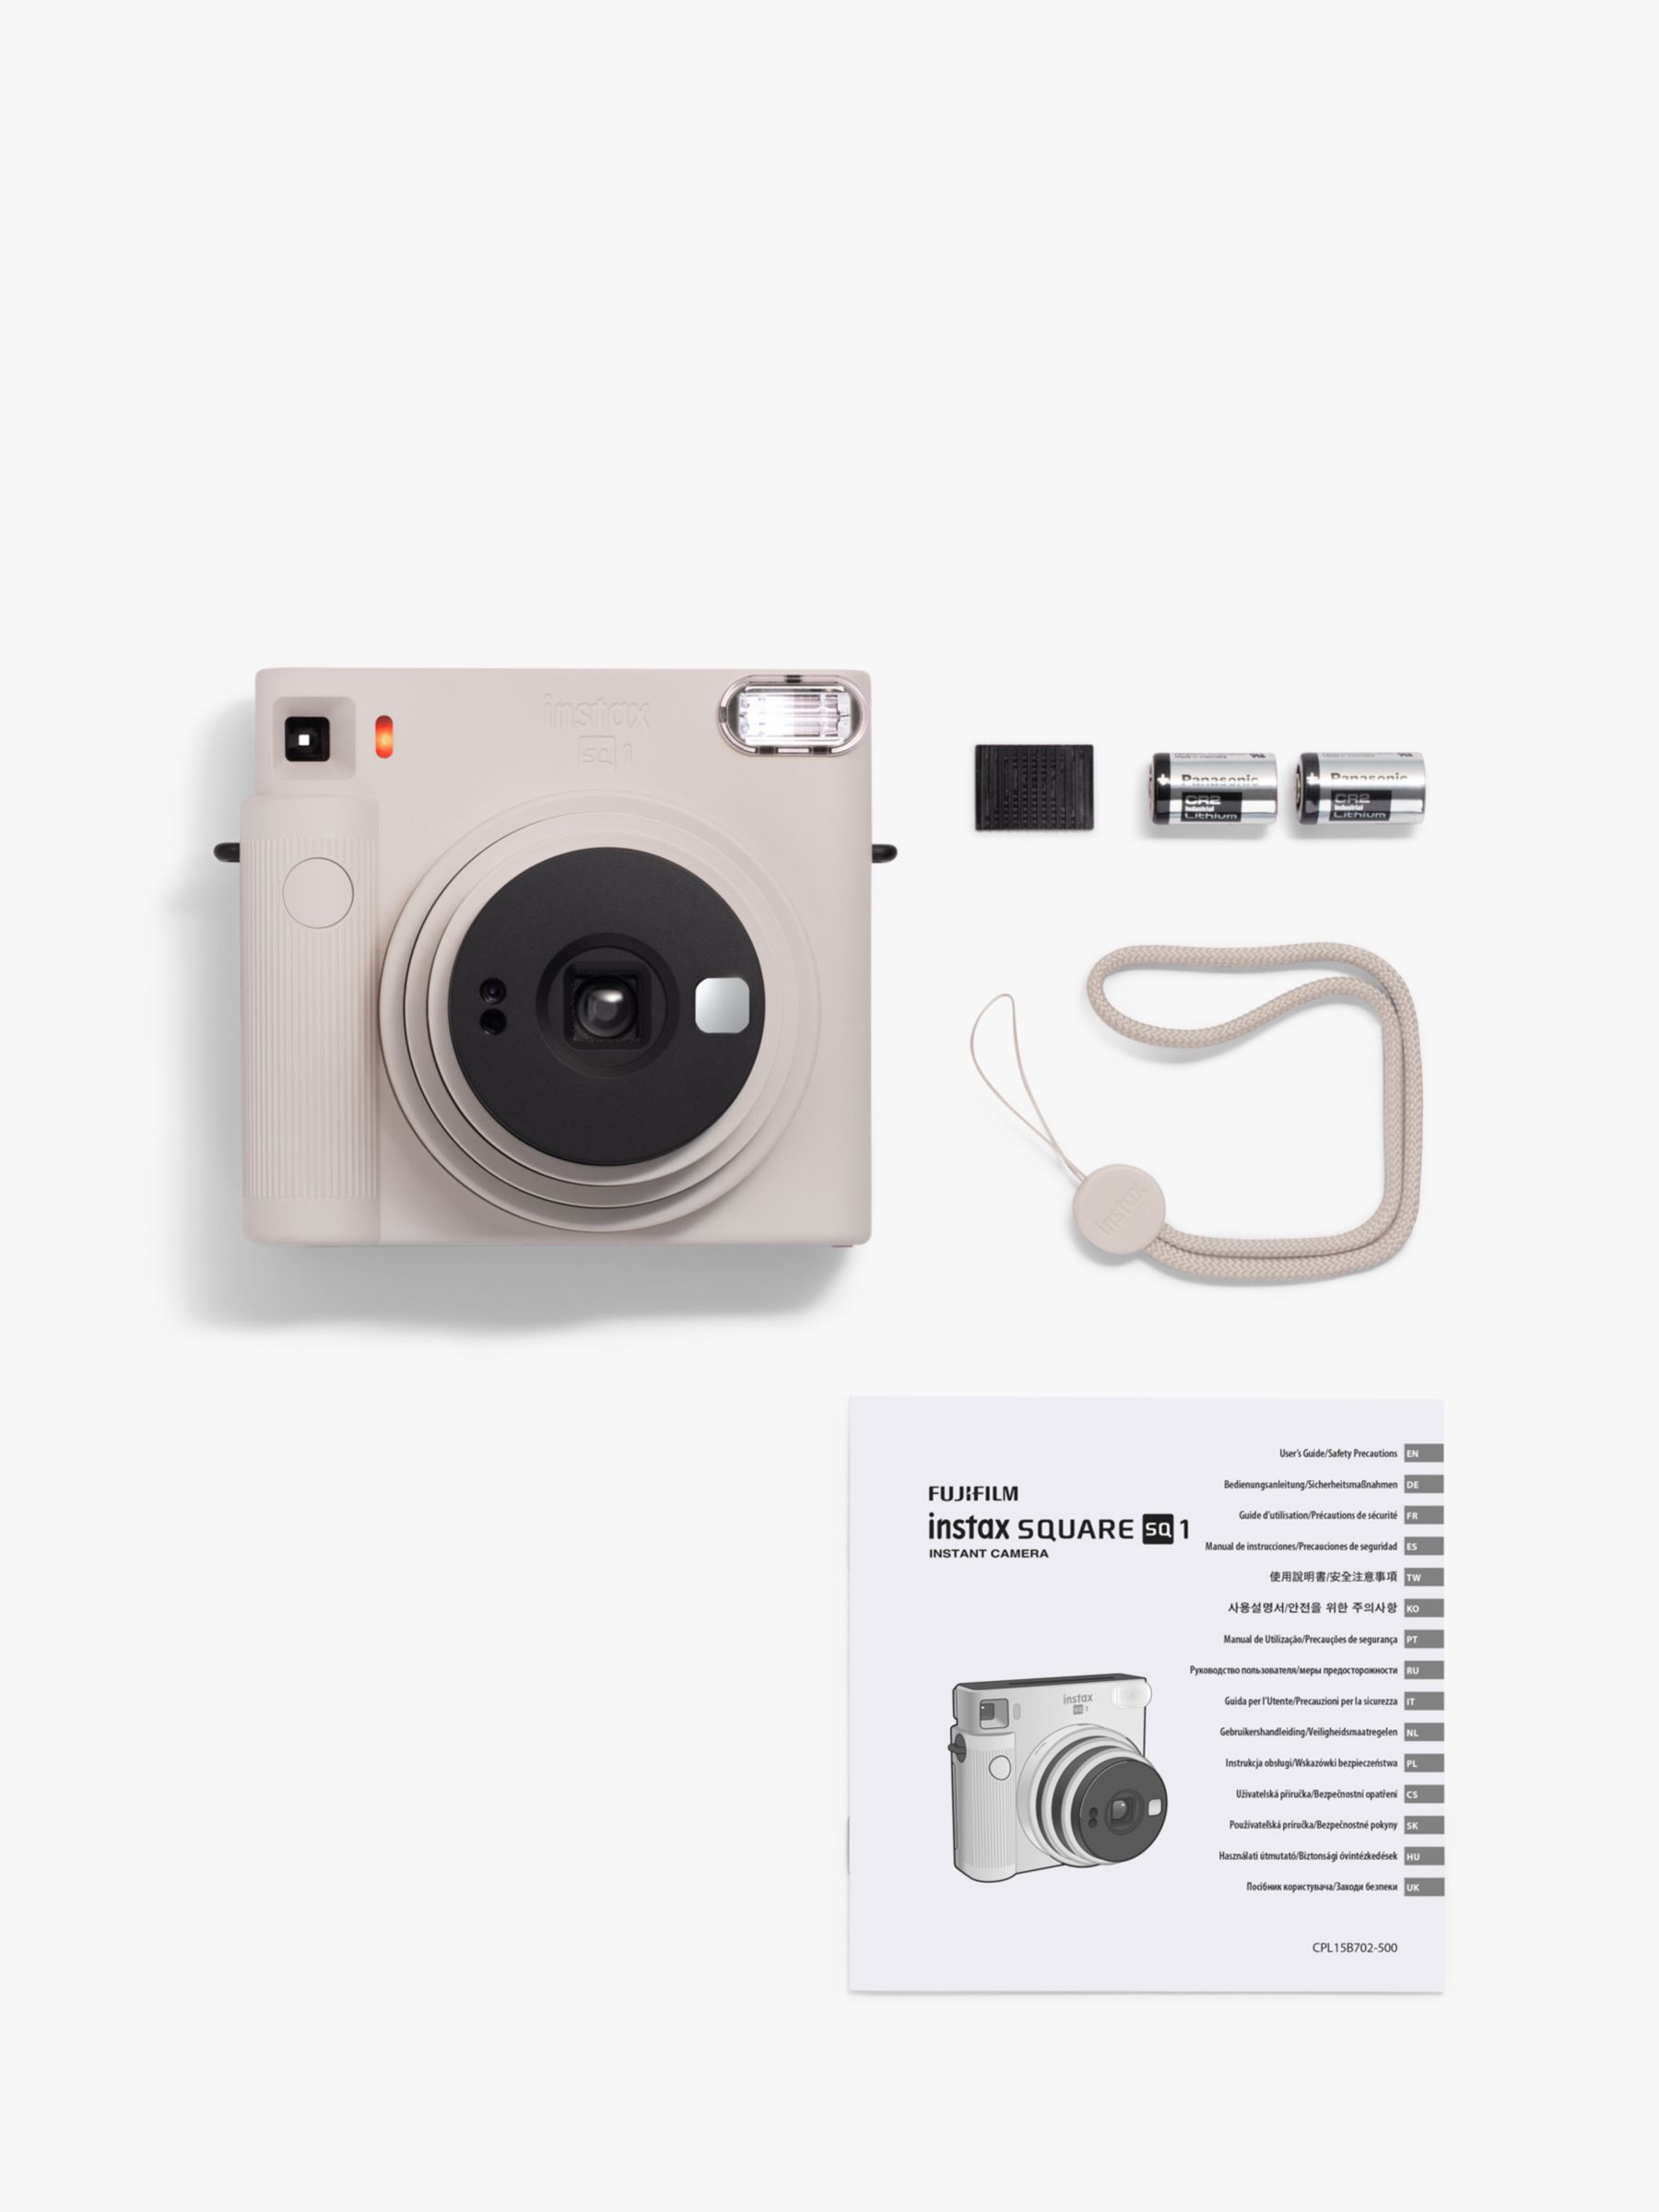 Fujifilm Instax SQUARE SQ1 Instant Camera with Selfie Mode, Built